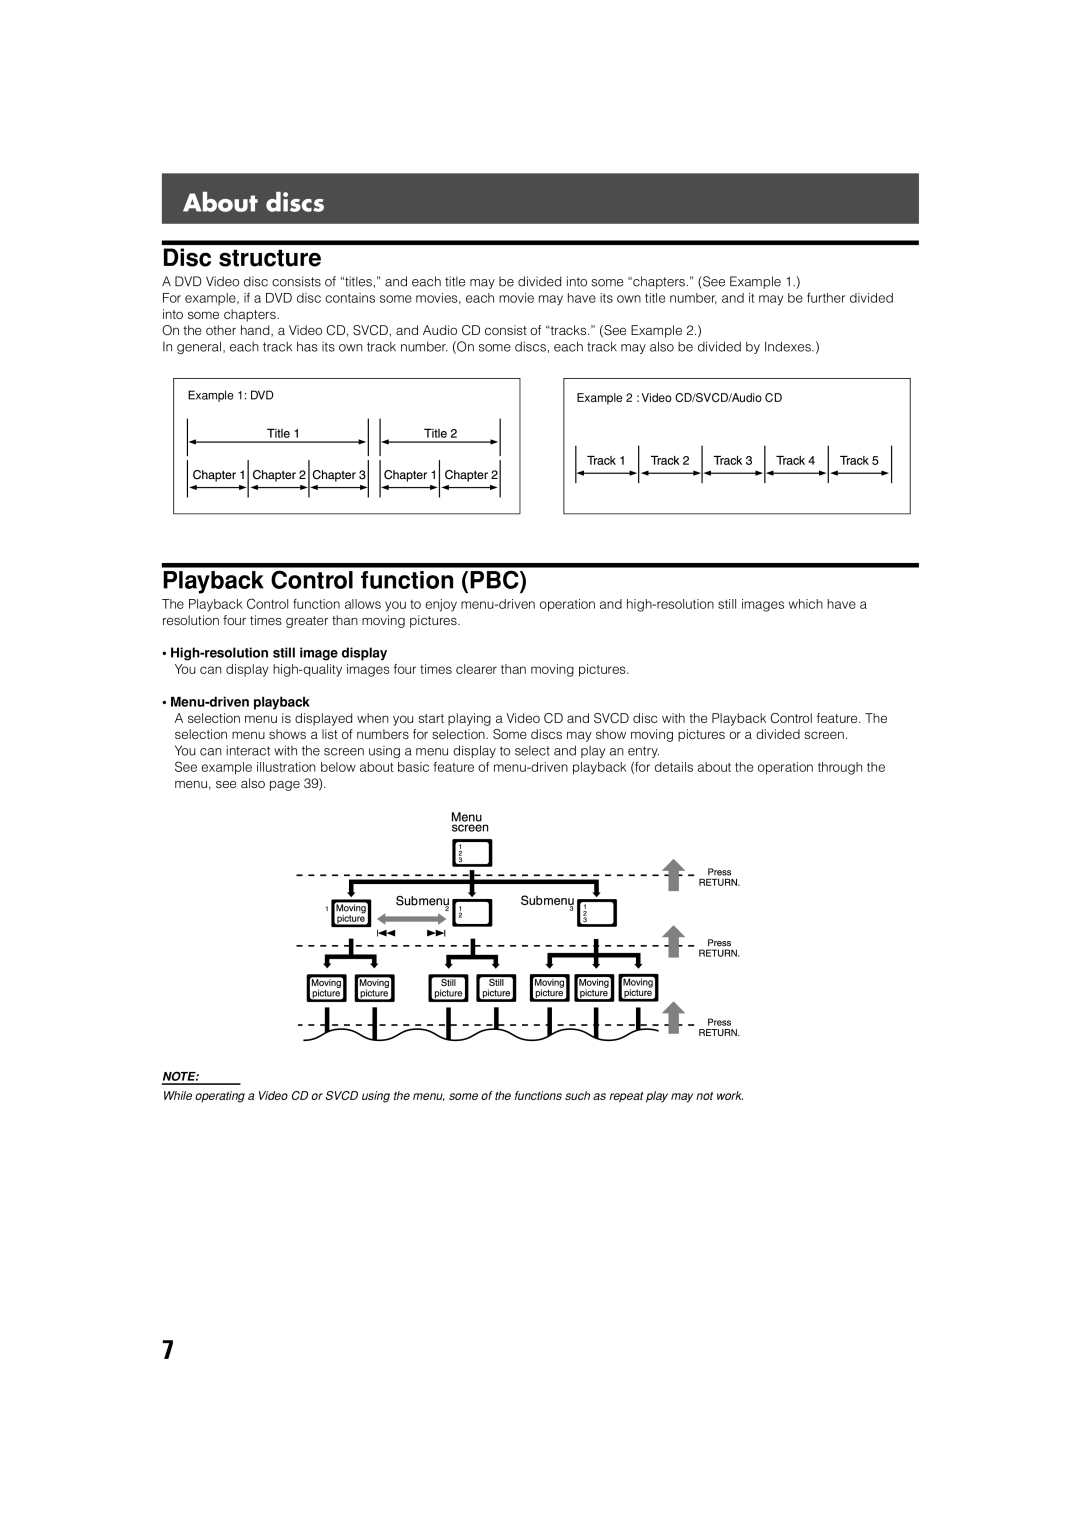 JVC SP-XSV70, SP-PWV70 manual About discs, Disc structure, Playback Control function PBC 